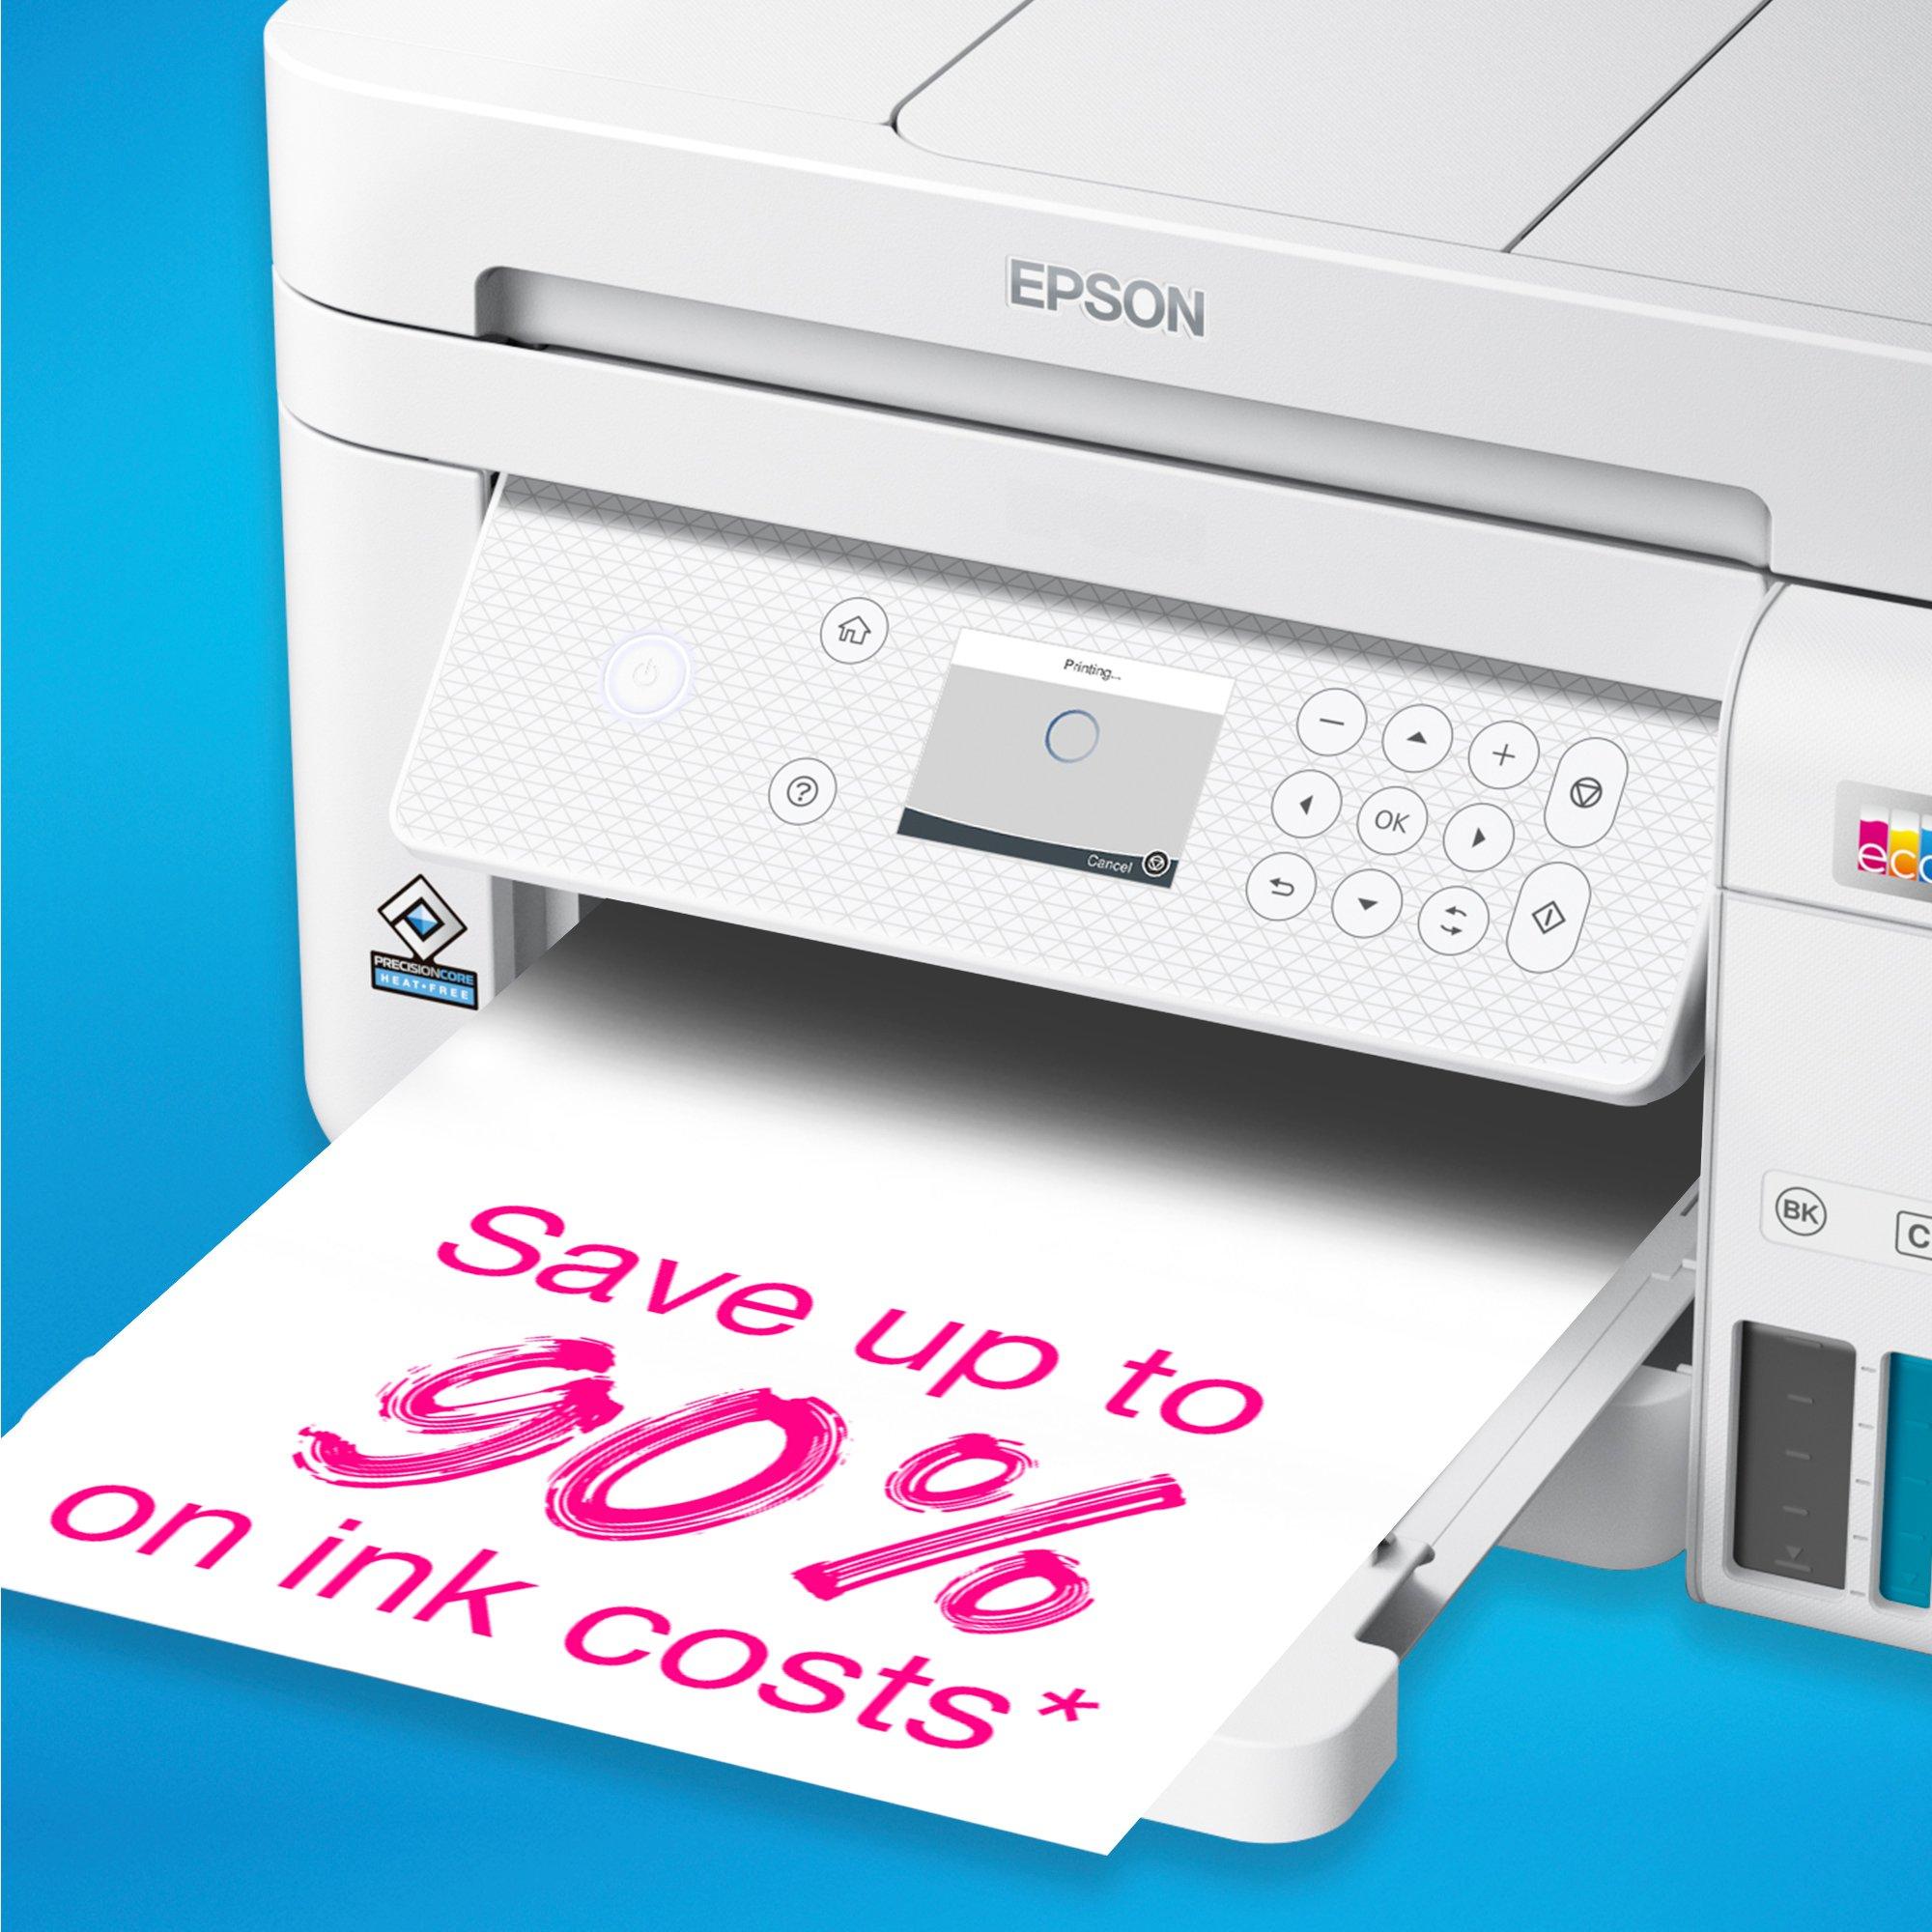 EcoTank L6276 | Consumer | Inkjet Printers | Printers | Products 